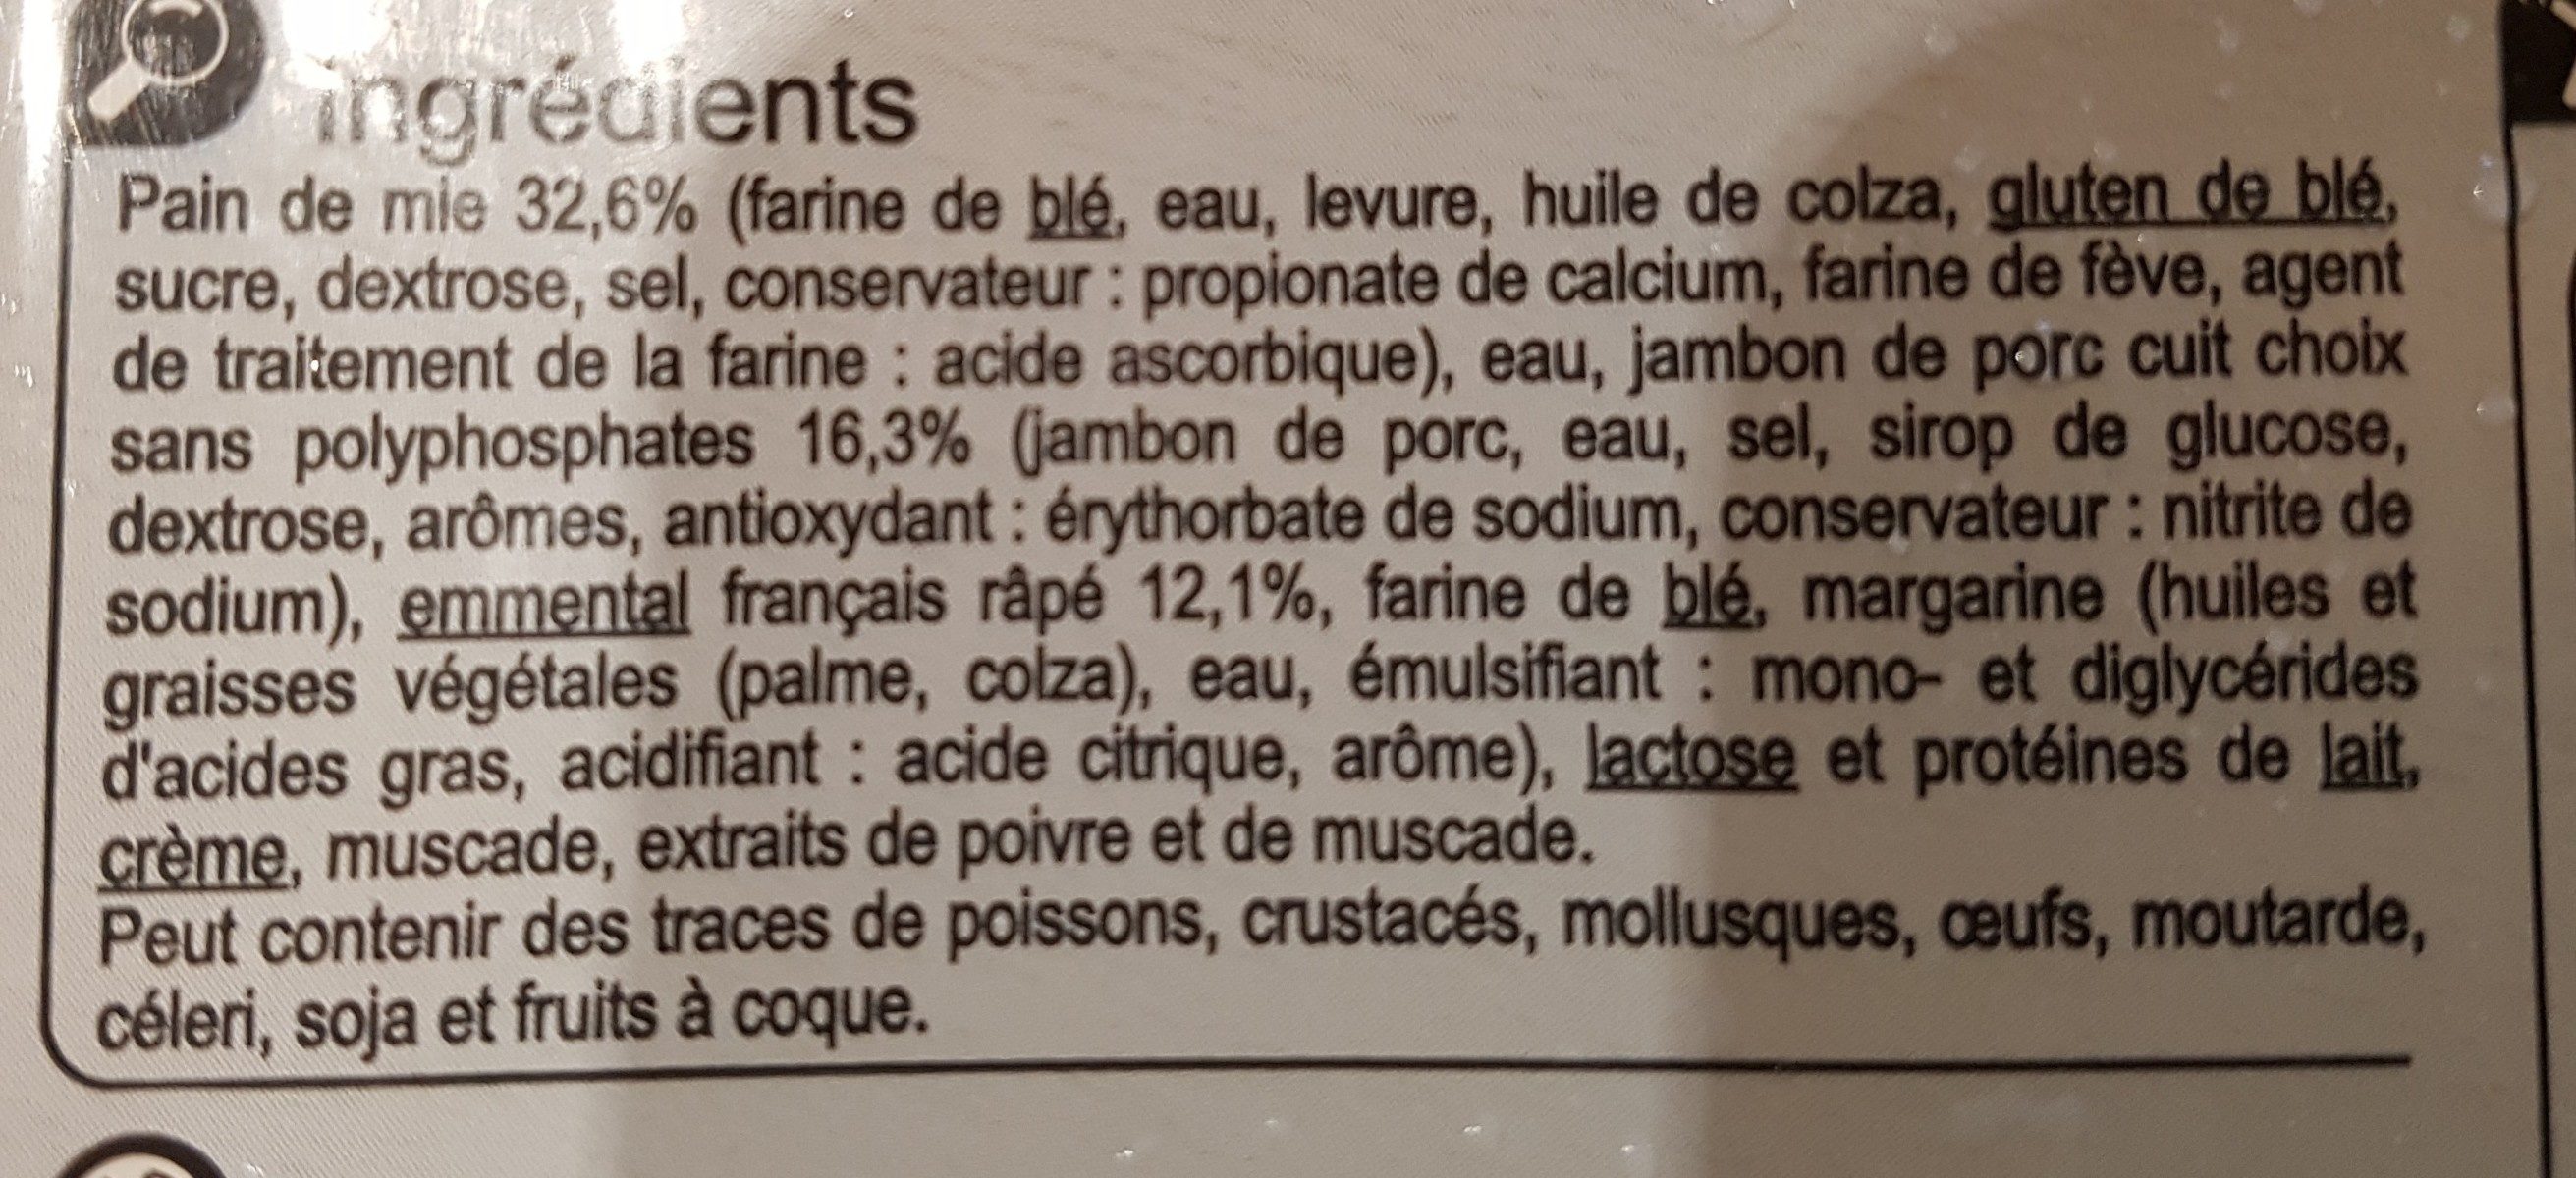 Croque-monsieur gratiné - المكونات - fr